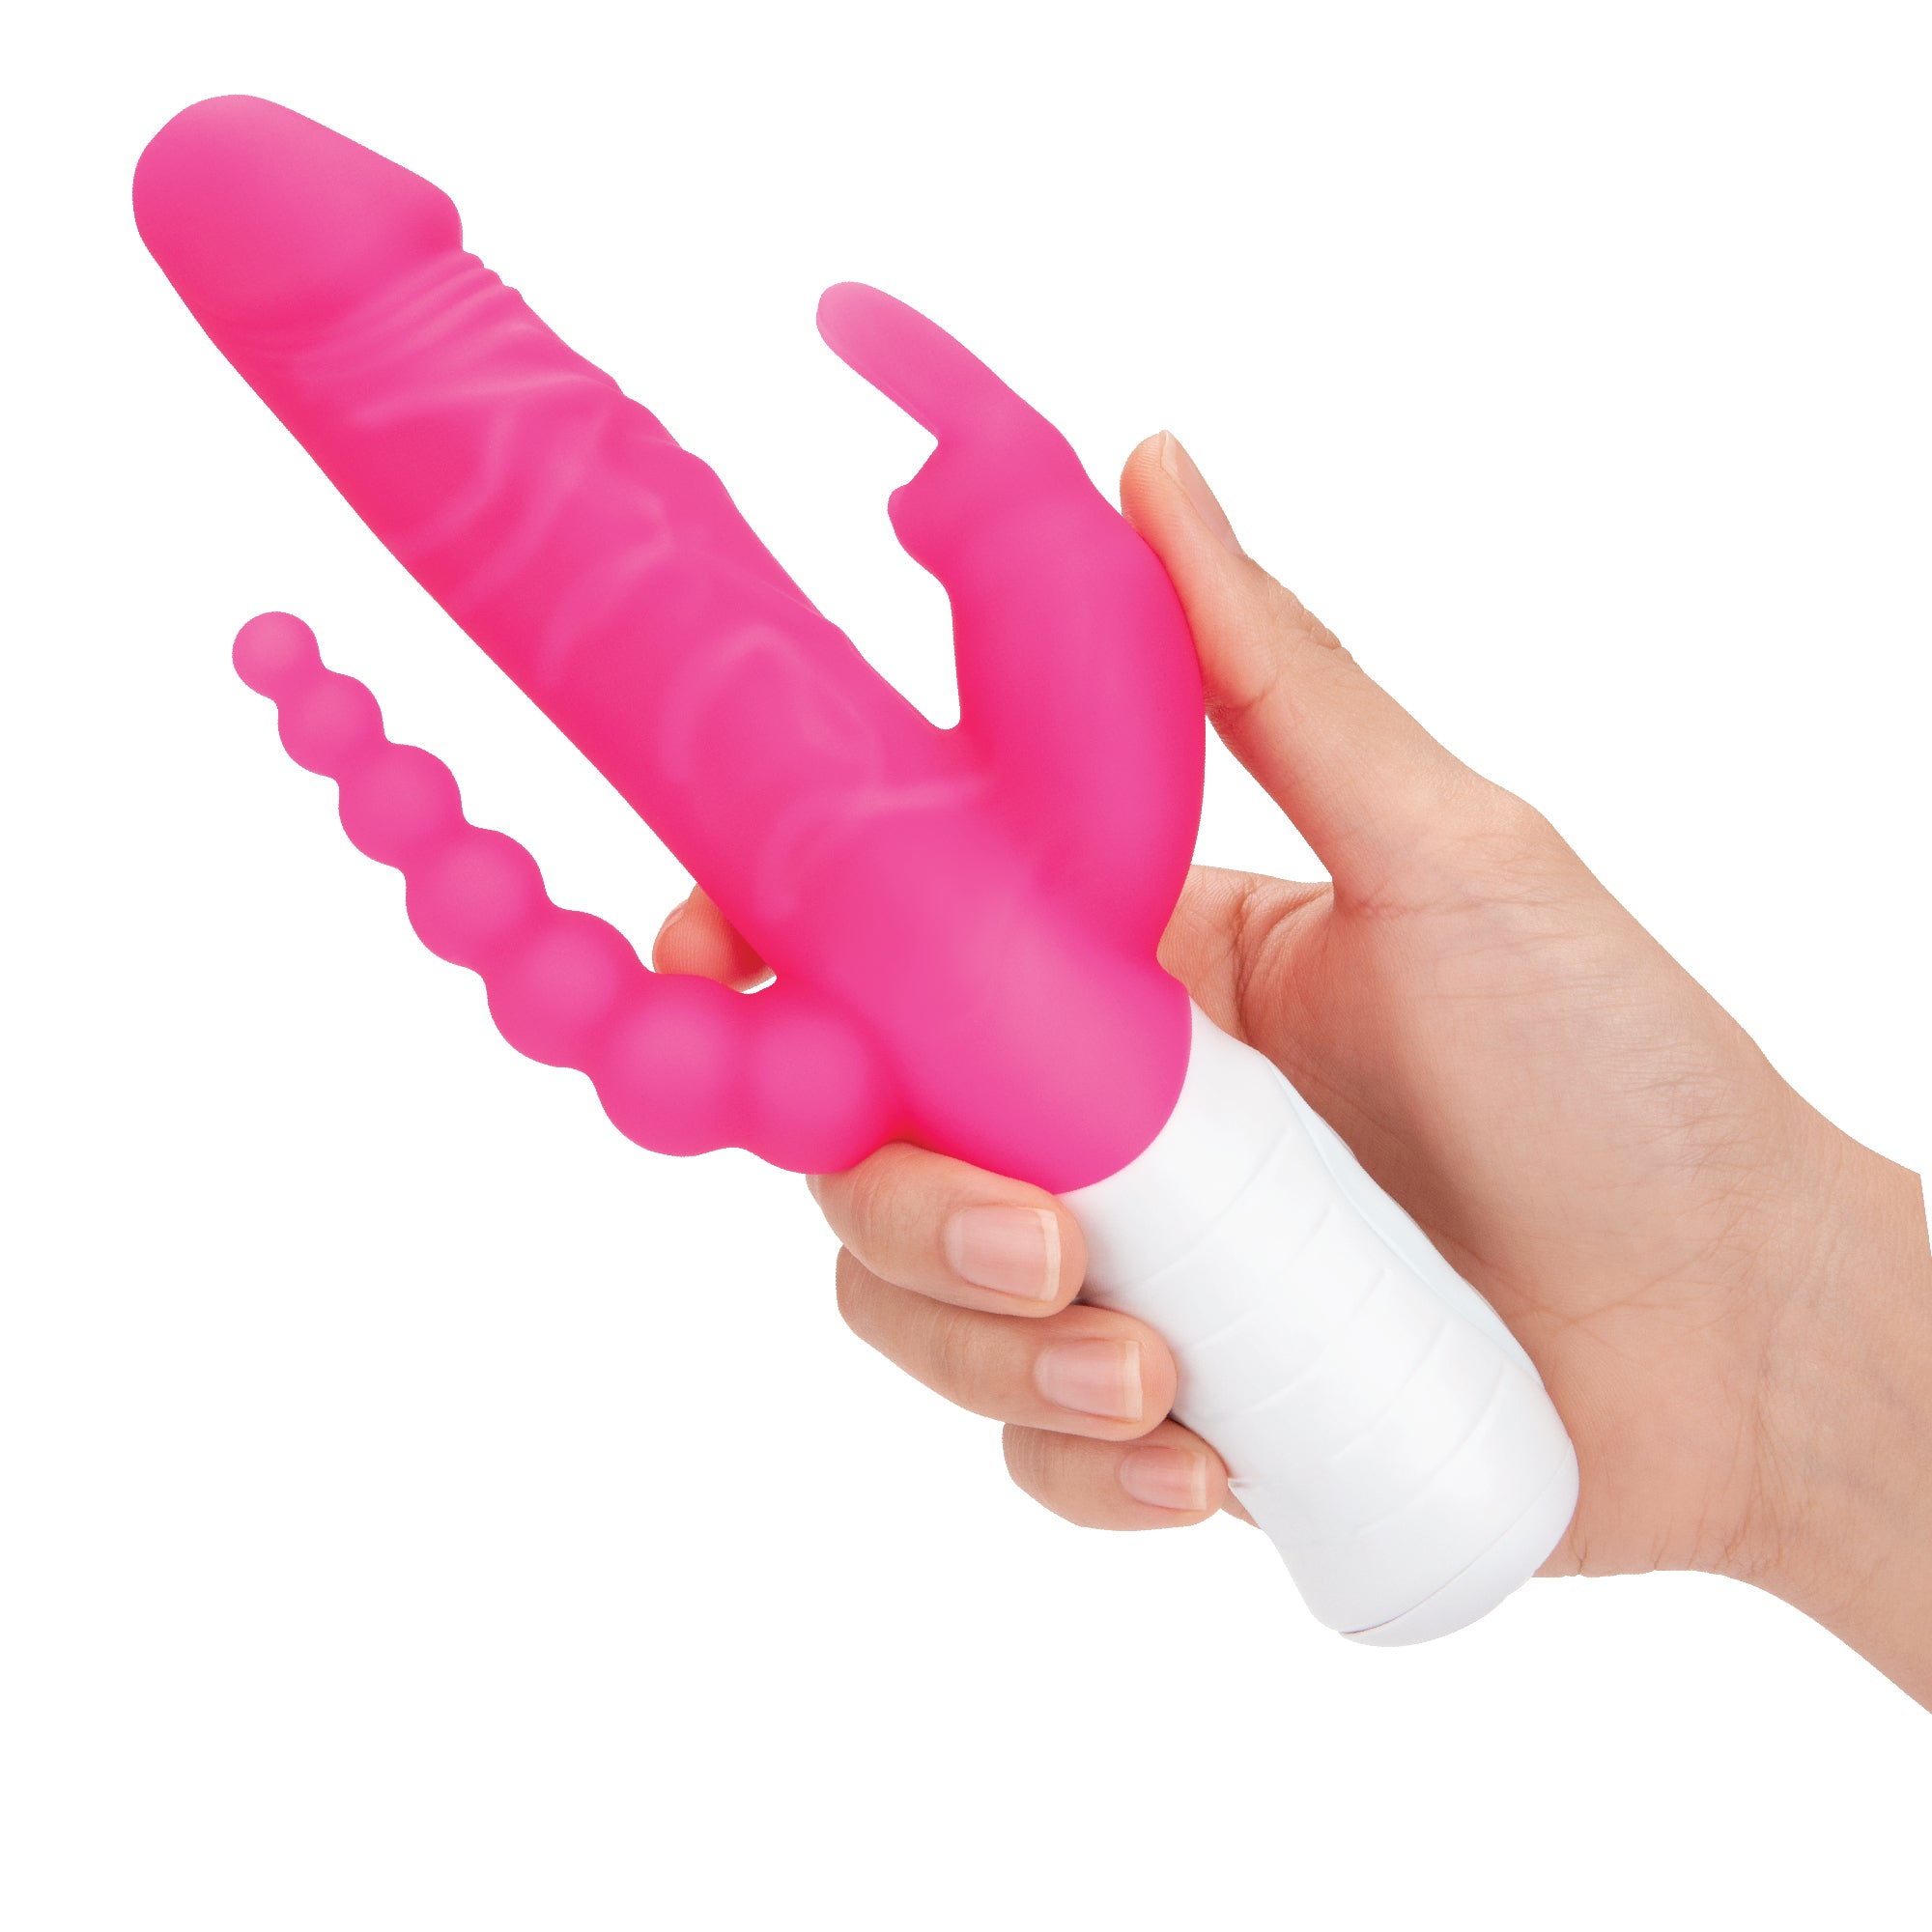 Rabbit Essentials Slim Shaft Rabbit Vibrator with Rotating Beads  Hot Pink